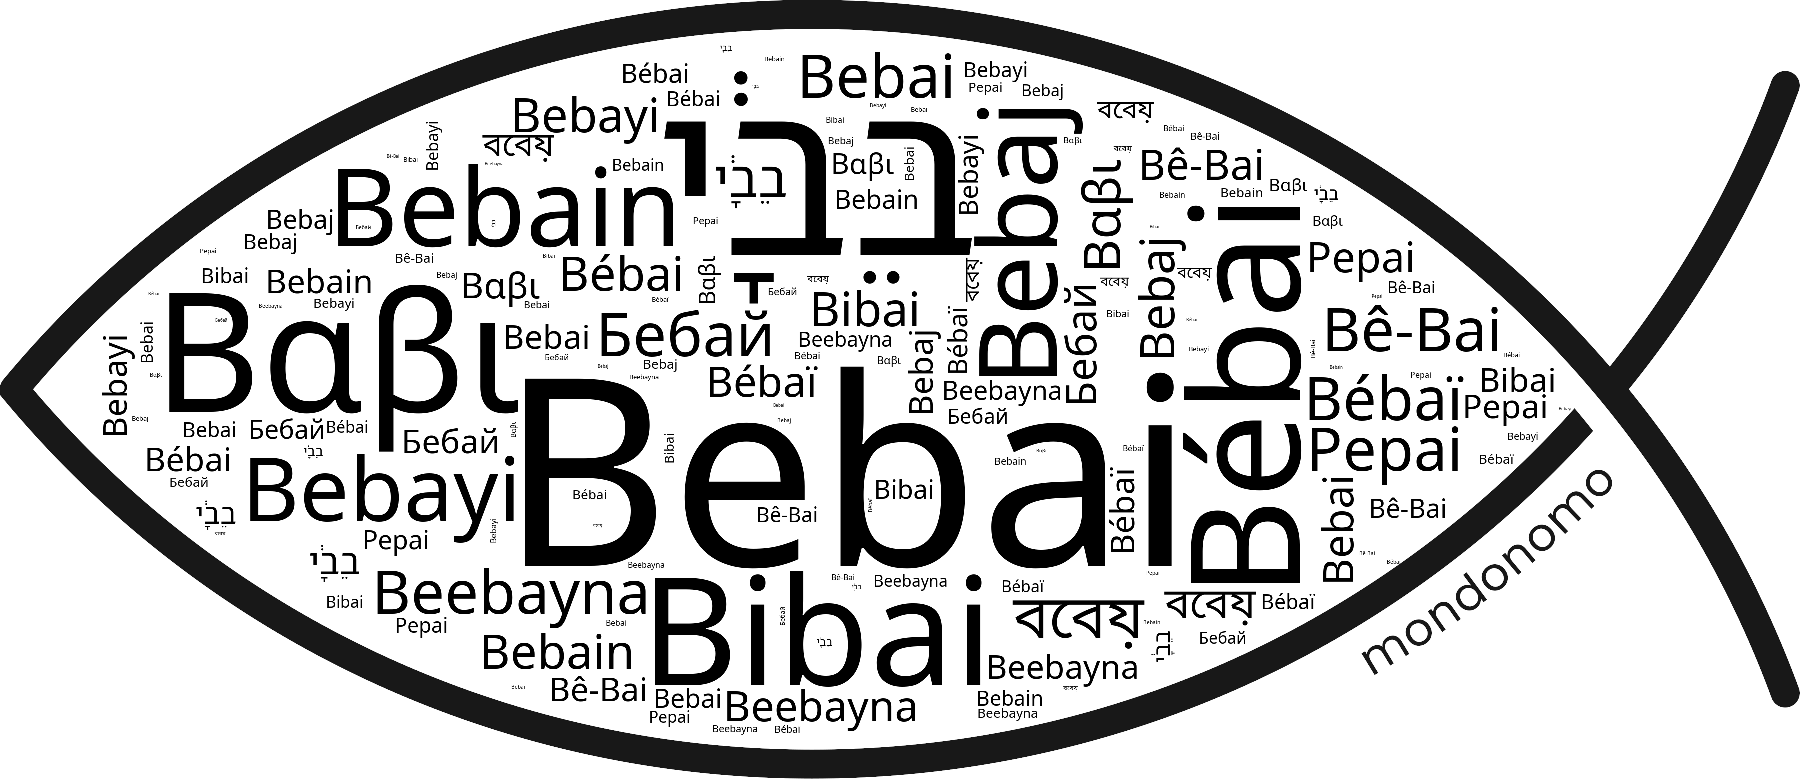 Name Bebai in the world's Bibles